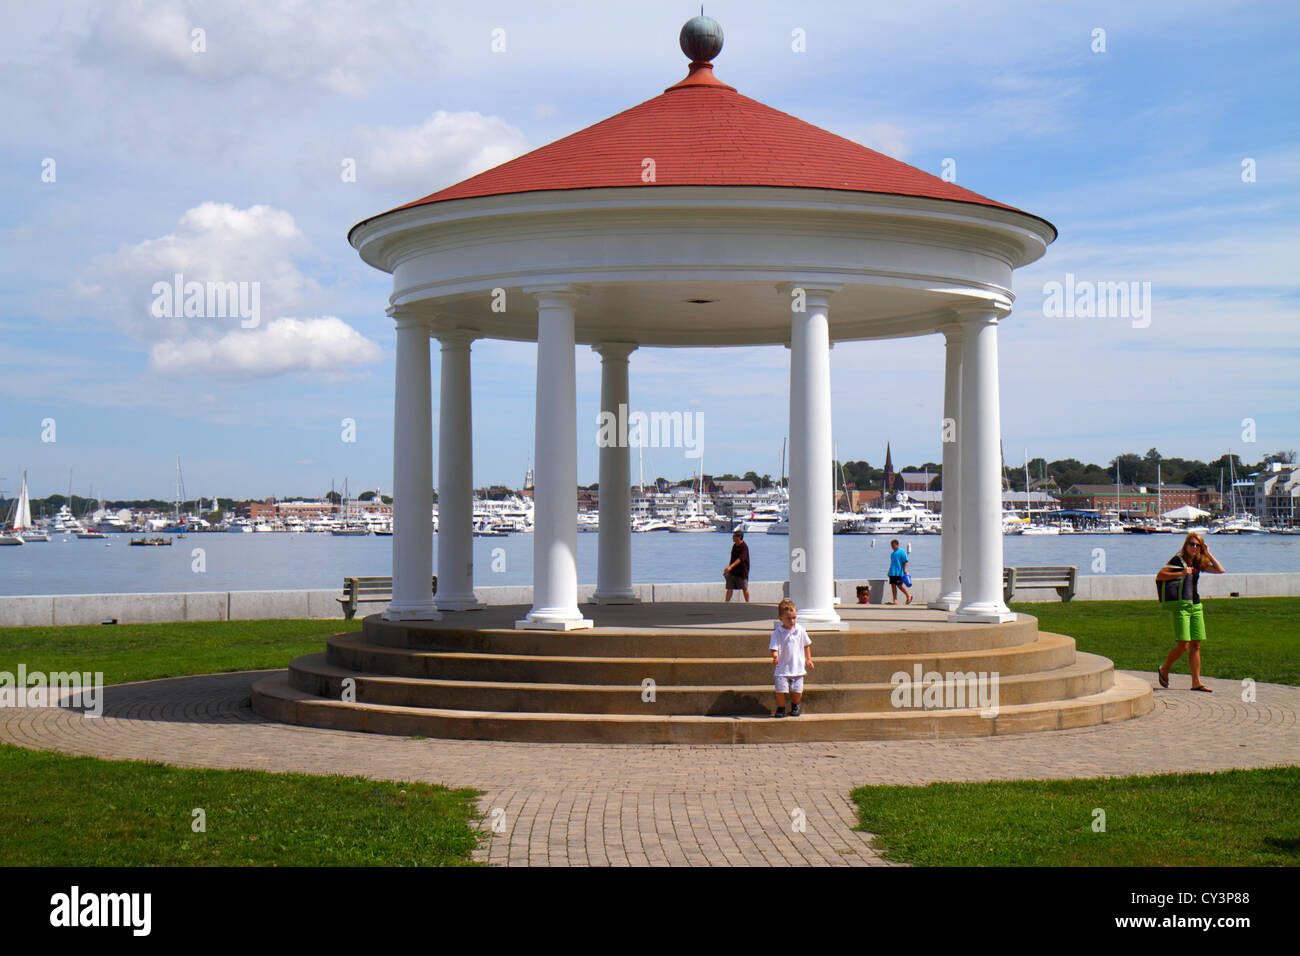 Newport Rhode Island, New England, King Park, Brenton Cove, Newport Harbor, Pavillon, Boote, Besucher reisen Reise Touristik Wahrzeichen Stockfoto